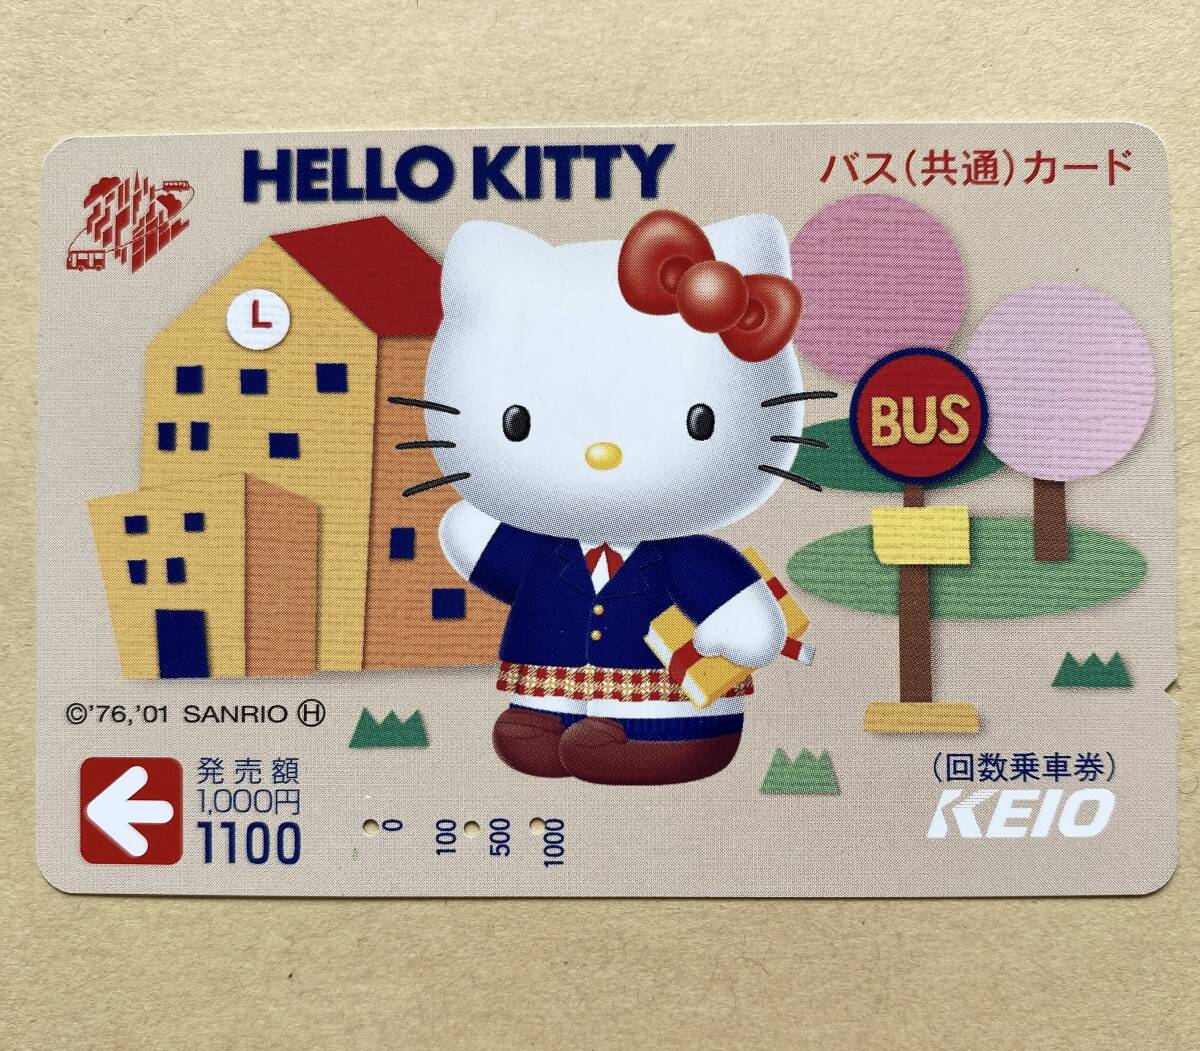 [ использованный ] bus card столица . электро- металлический Hello Kitty 